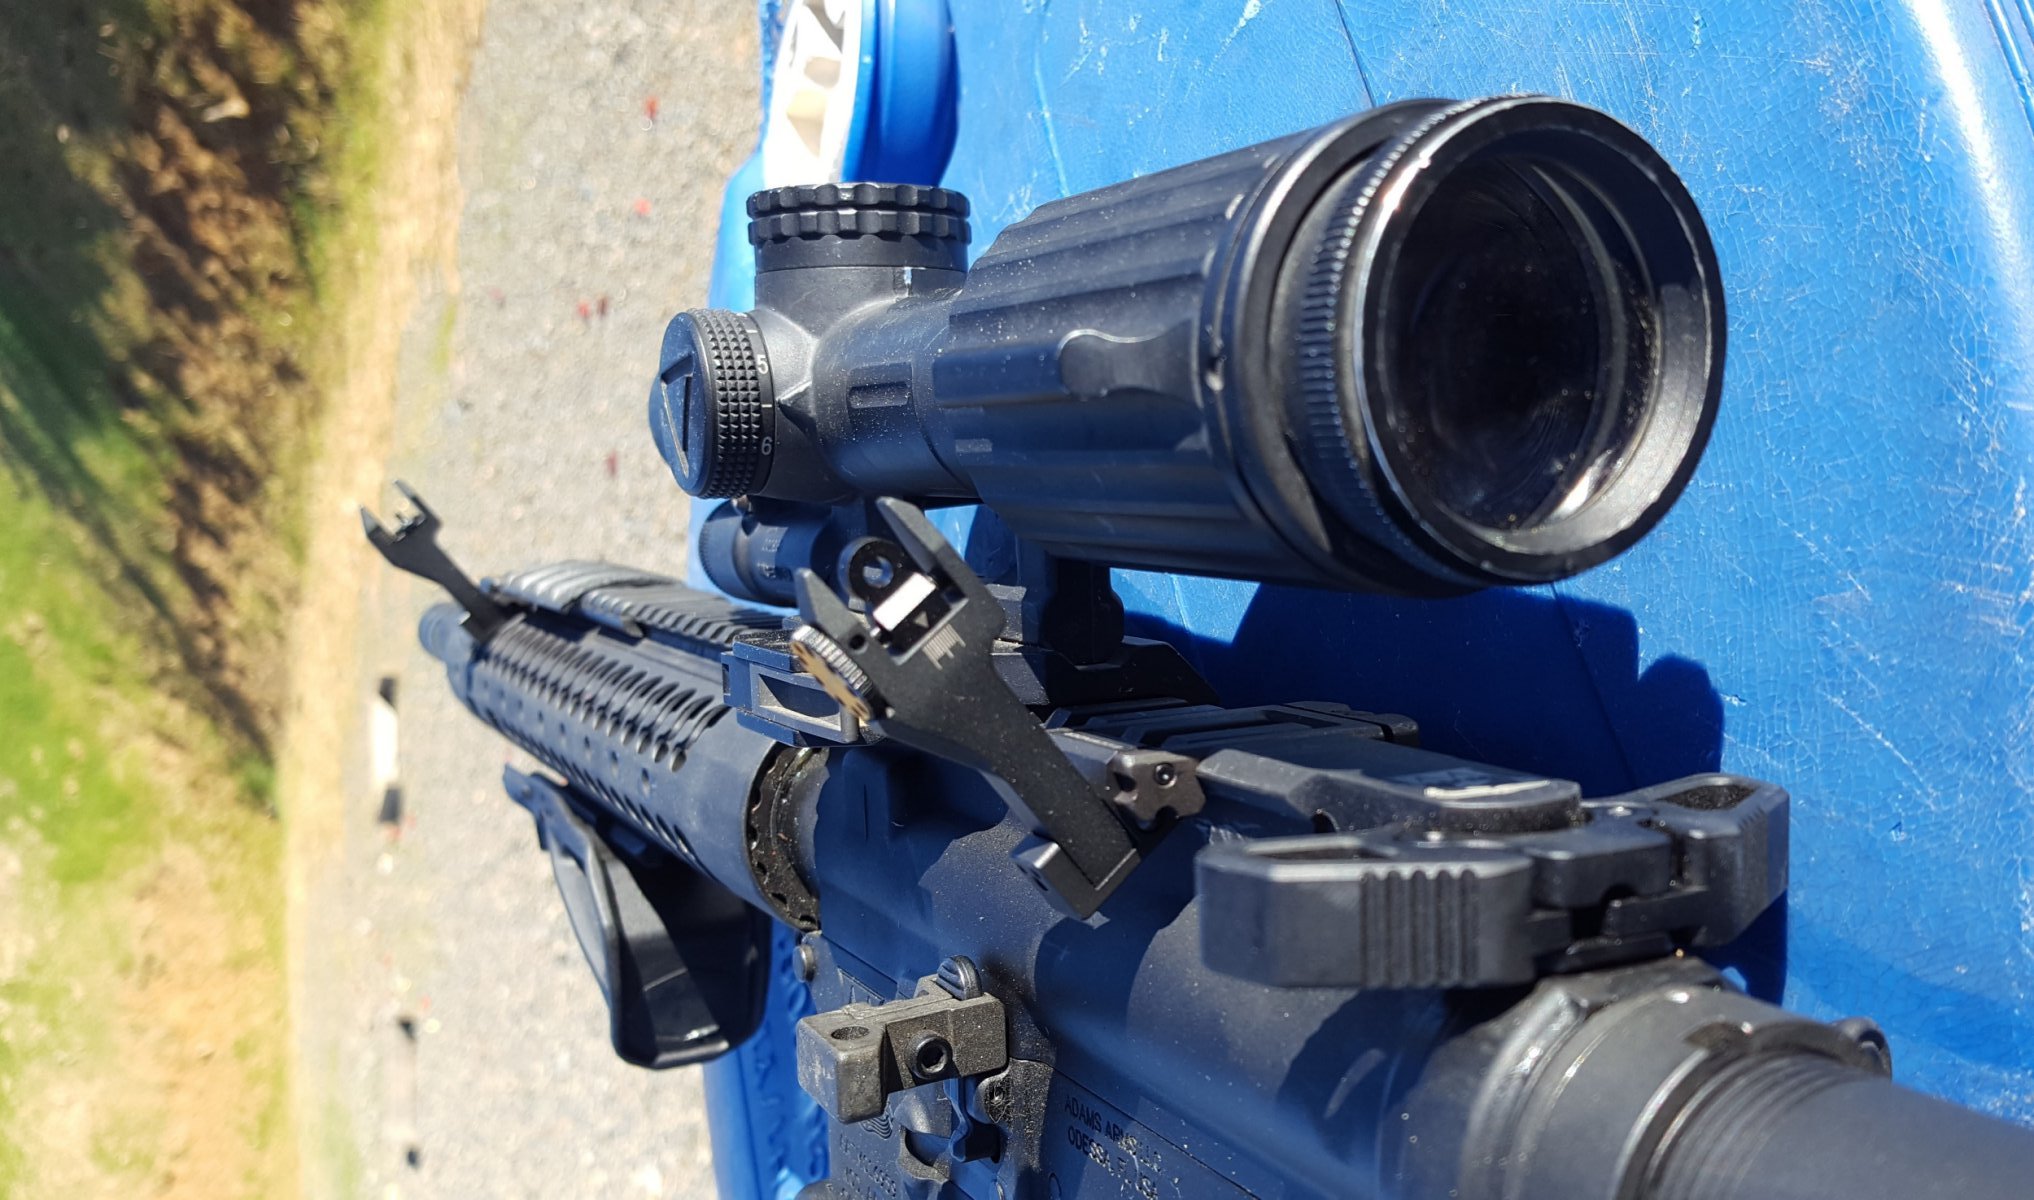 Strike Industries offset sights set up for a left-handed shooter